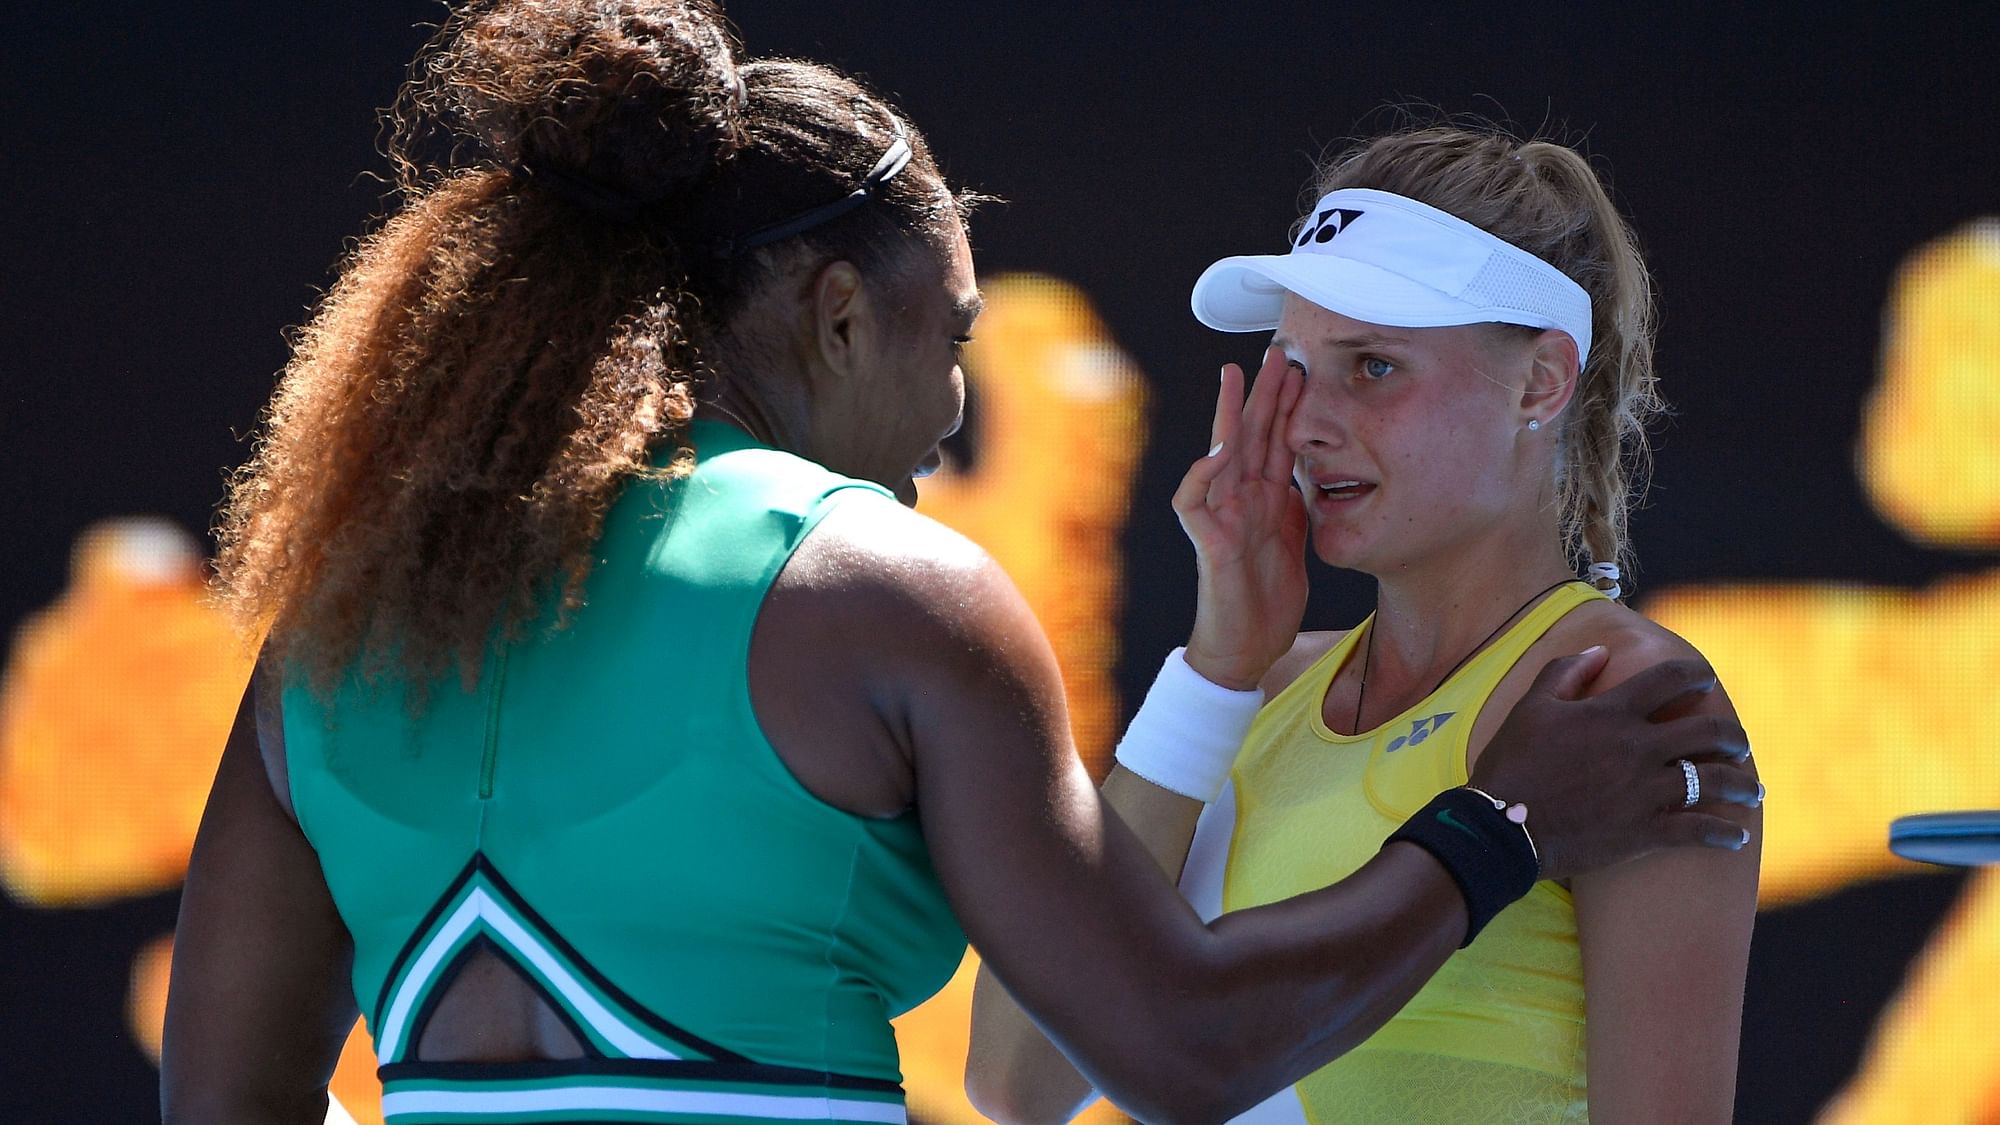 Serena Williams consoles Dayana Yastremska after winning their third round clash at the Australian Open 2019.